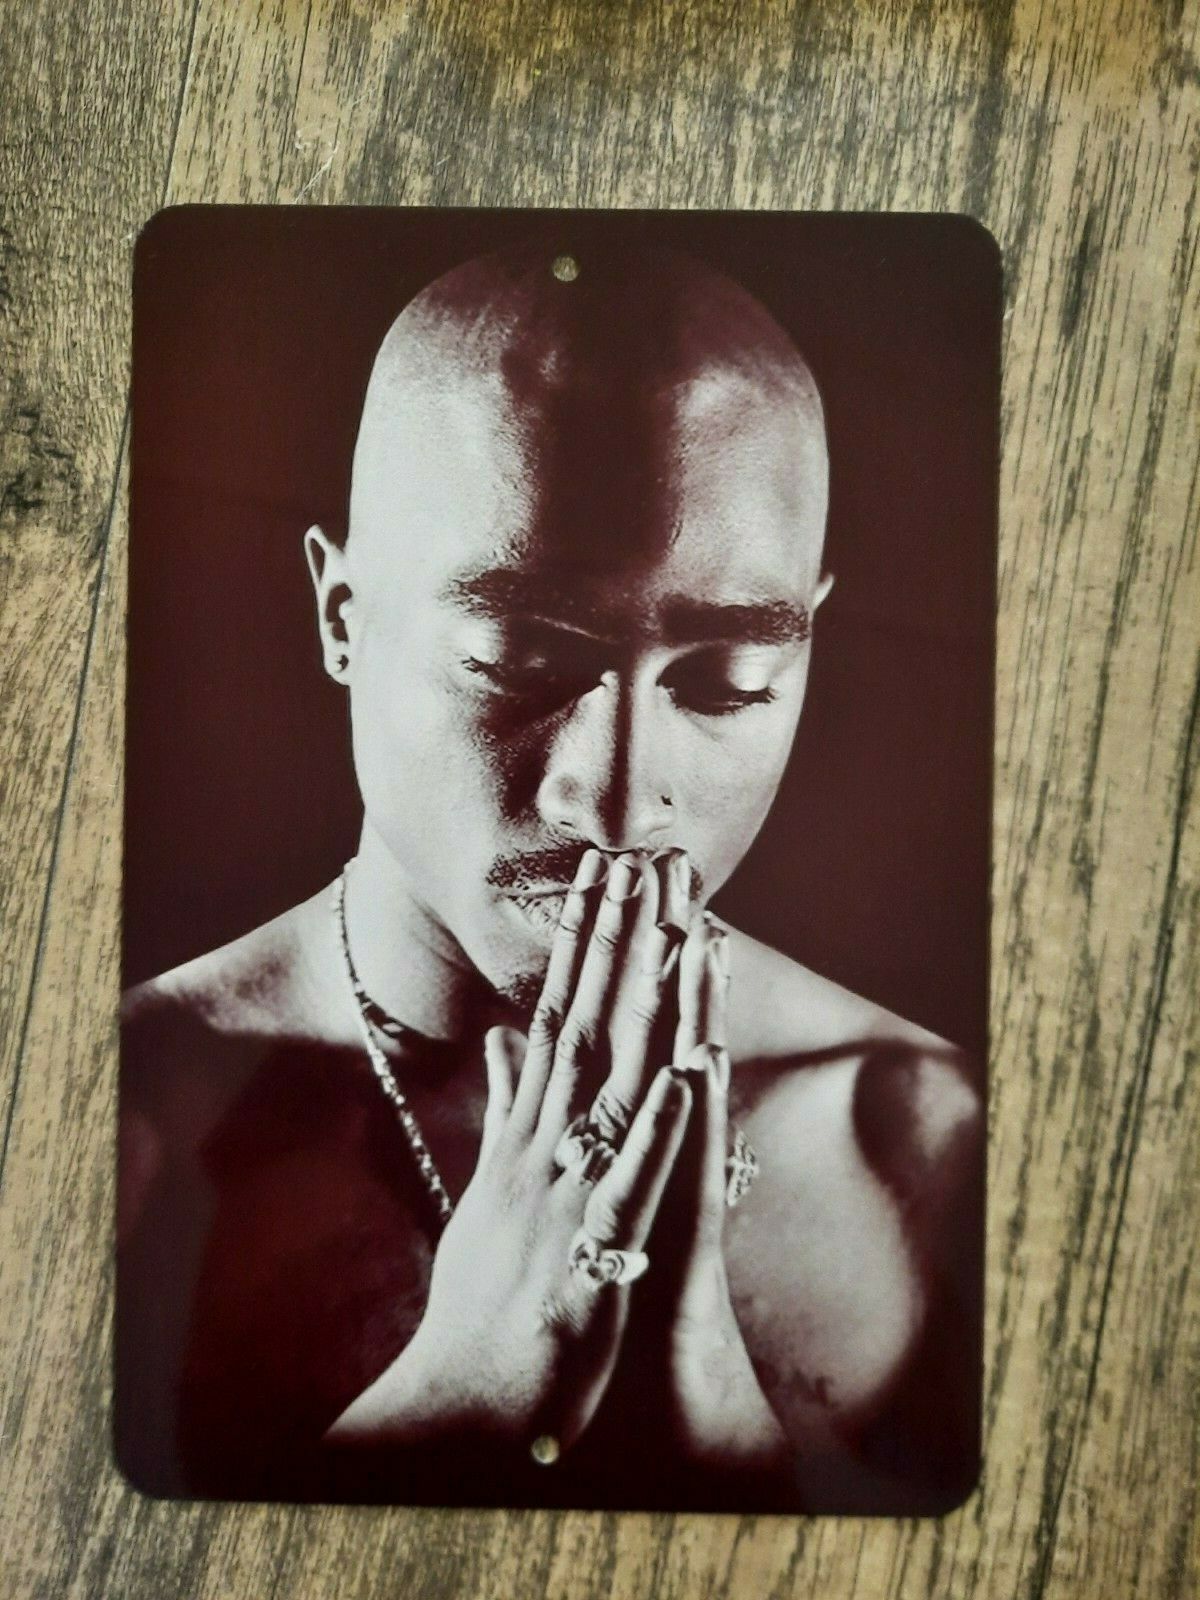 2Pac Tupac Shakur Rap Legend 8x12 Metal Wall Sign music